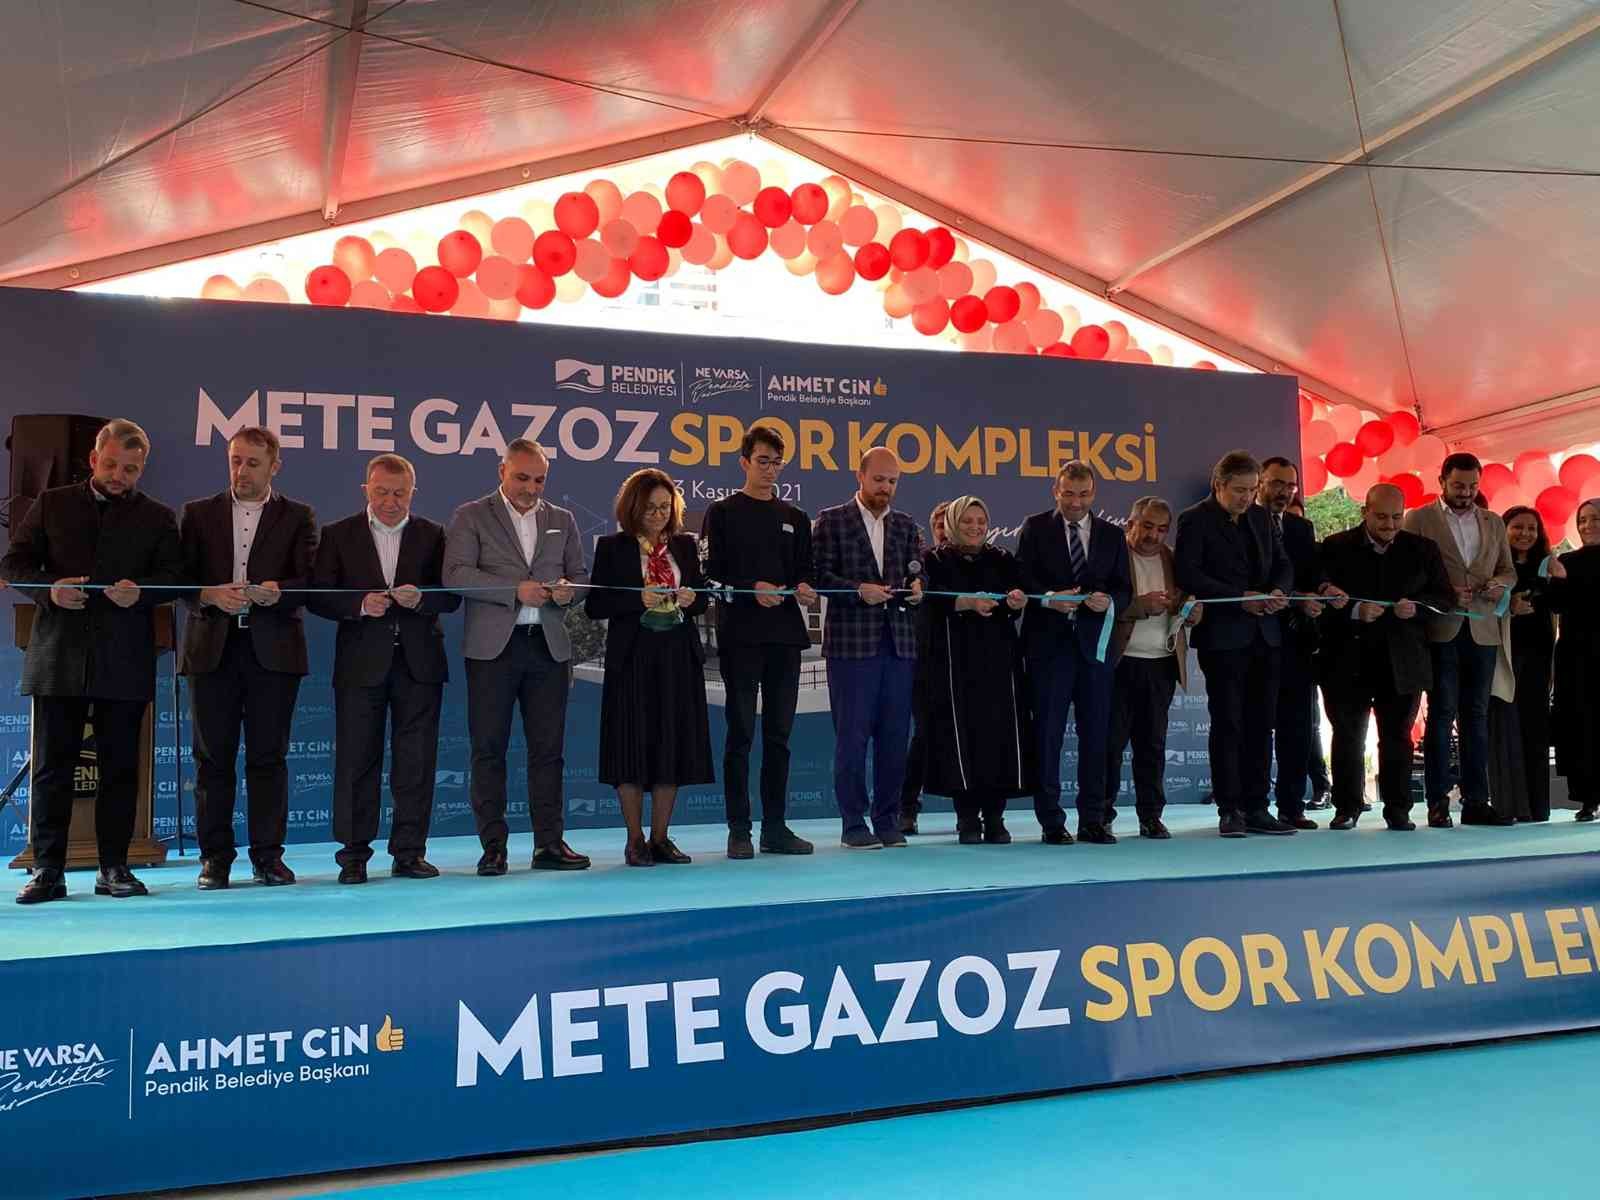 Pendik’te Mete Gazoz Spor Kompleksi açıldı #istanbul